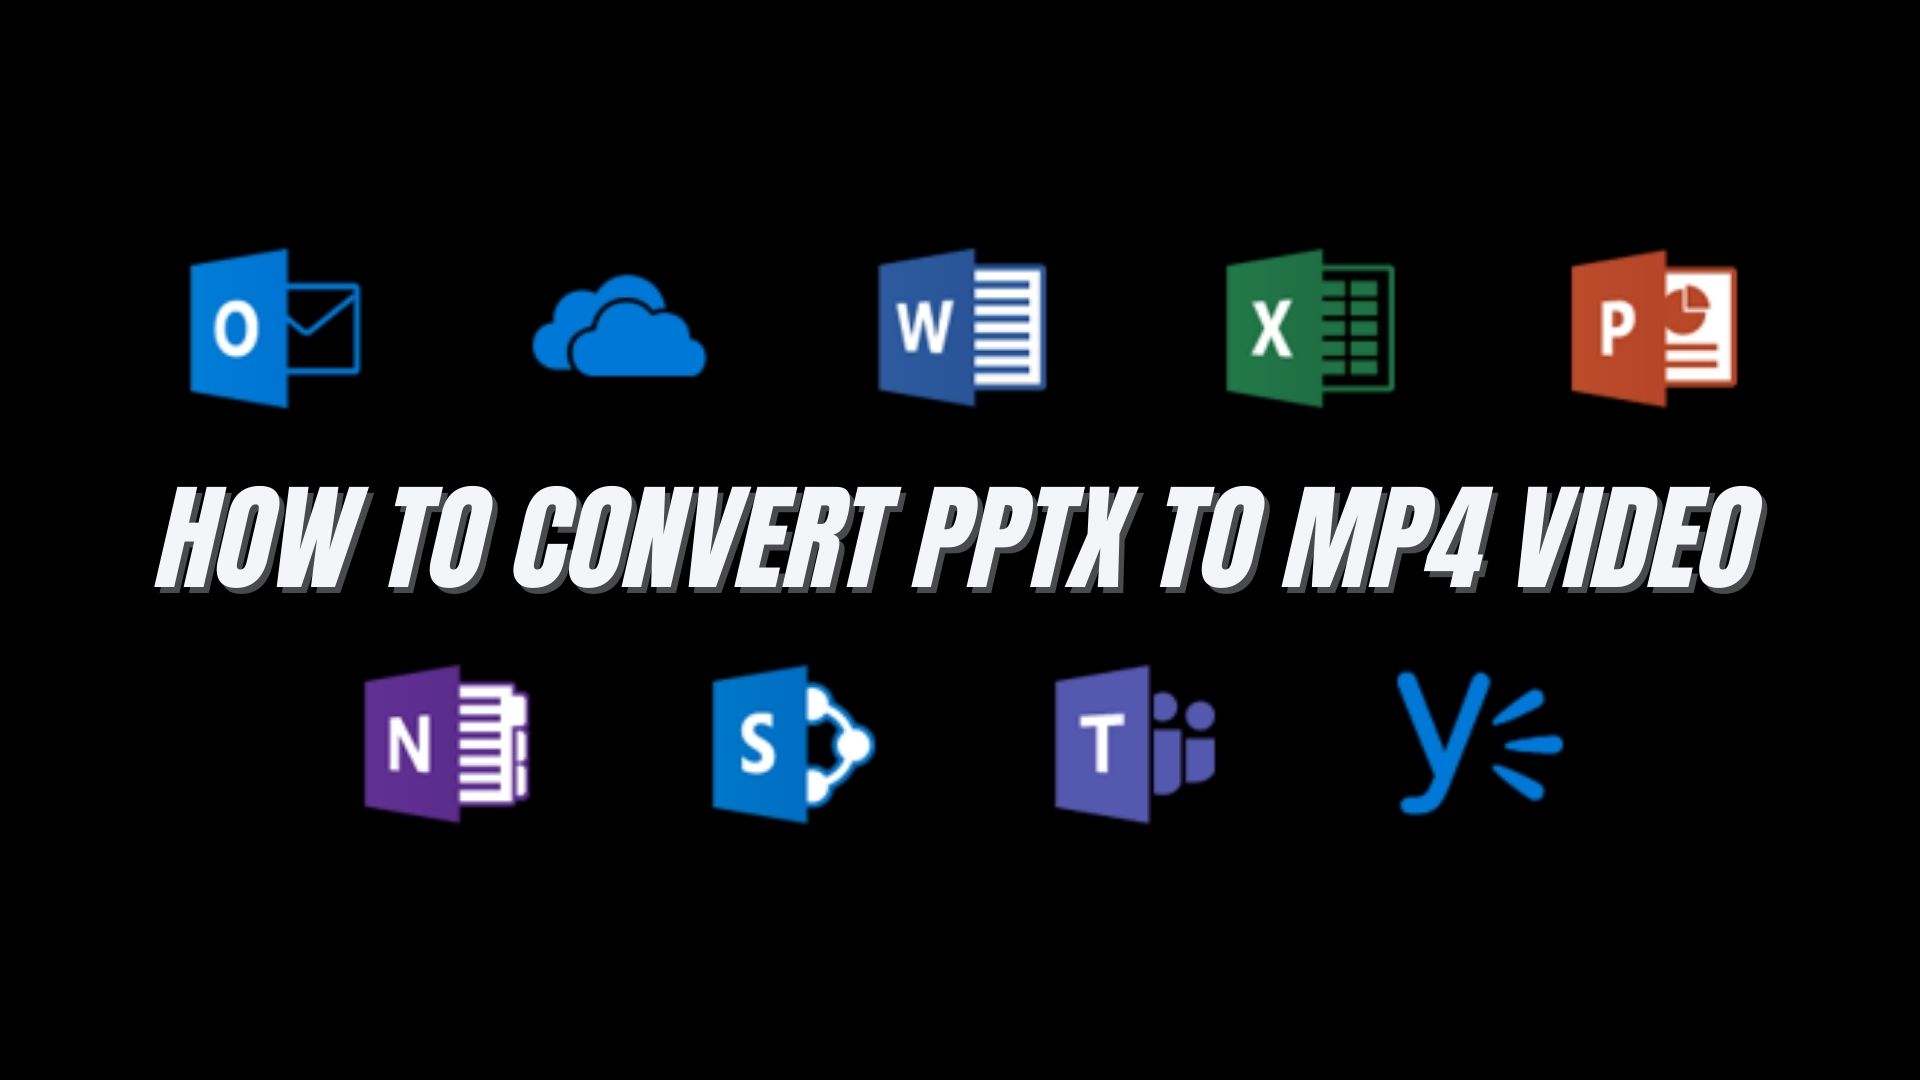 Convert PPTX to MP4 Video